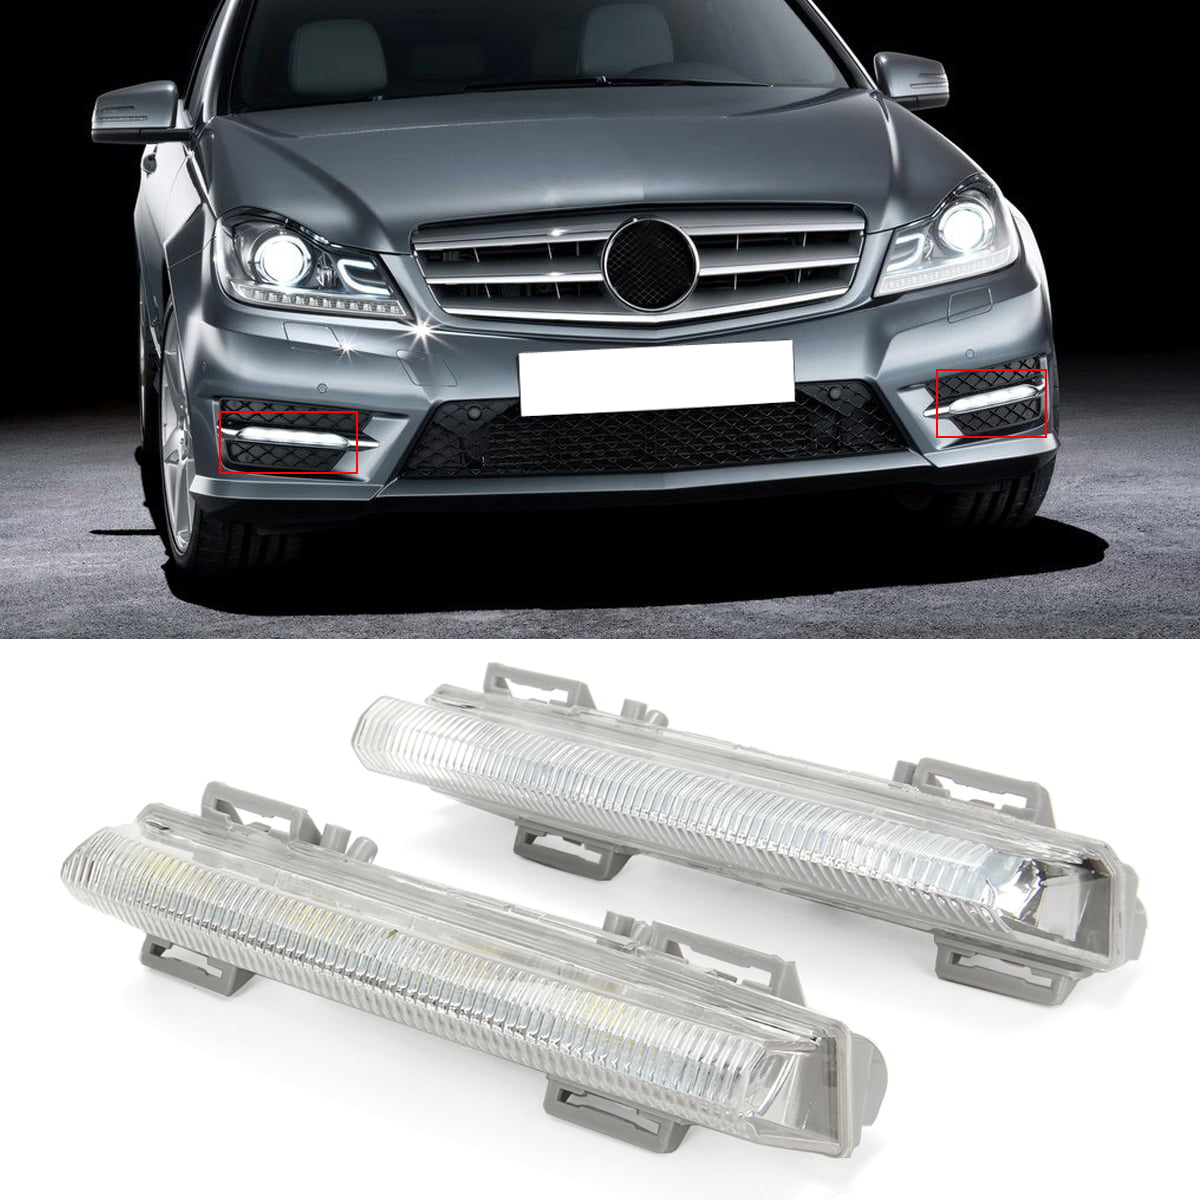 Left Daytime Driving Light Fog Lamp LED Daytime Running Lamp Fog Light Compatible with 2007-2015 Mercedes Benz C Class W204 C250 C300 C350 E Class W212 E350